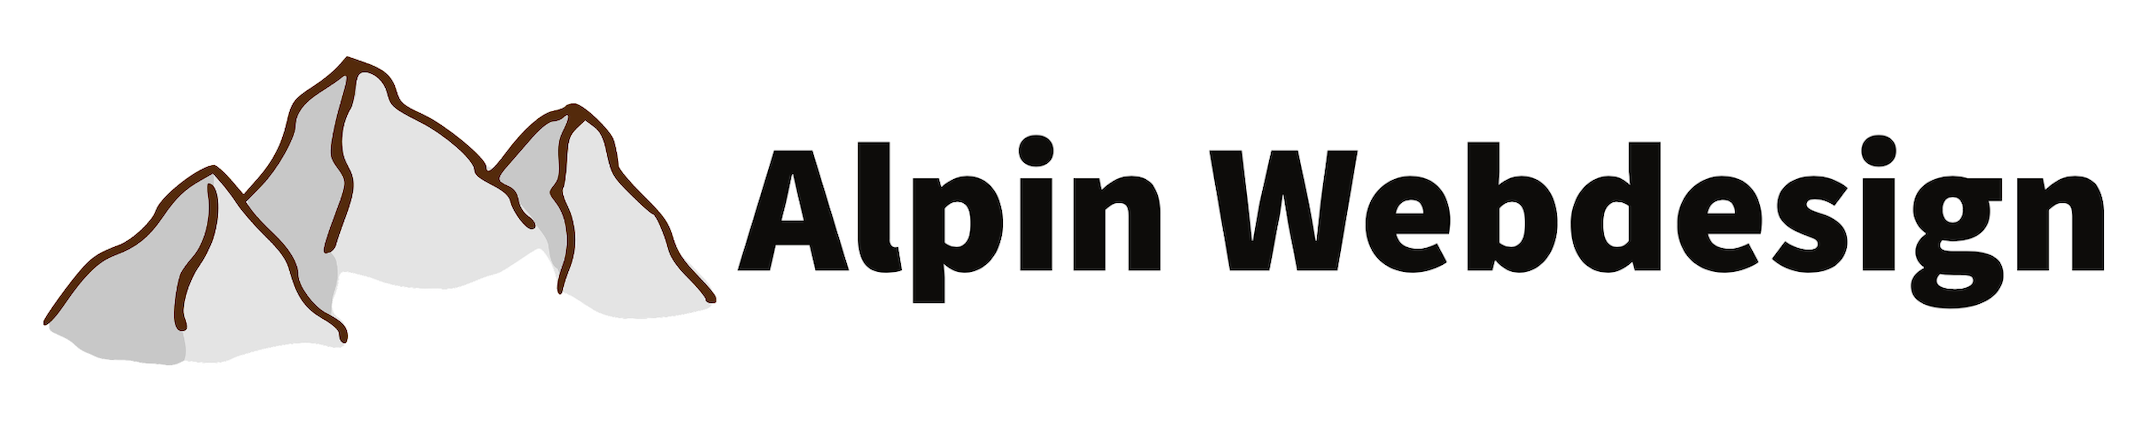 Alpin Webdesign (Support, Webdesign, Social Media, SEO, Slideshow, SSL, eShop, Newsletter...)